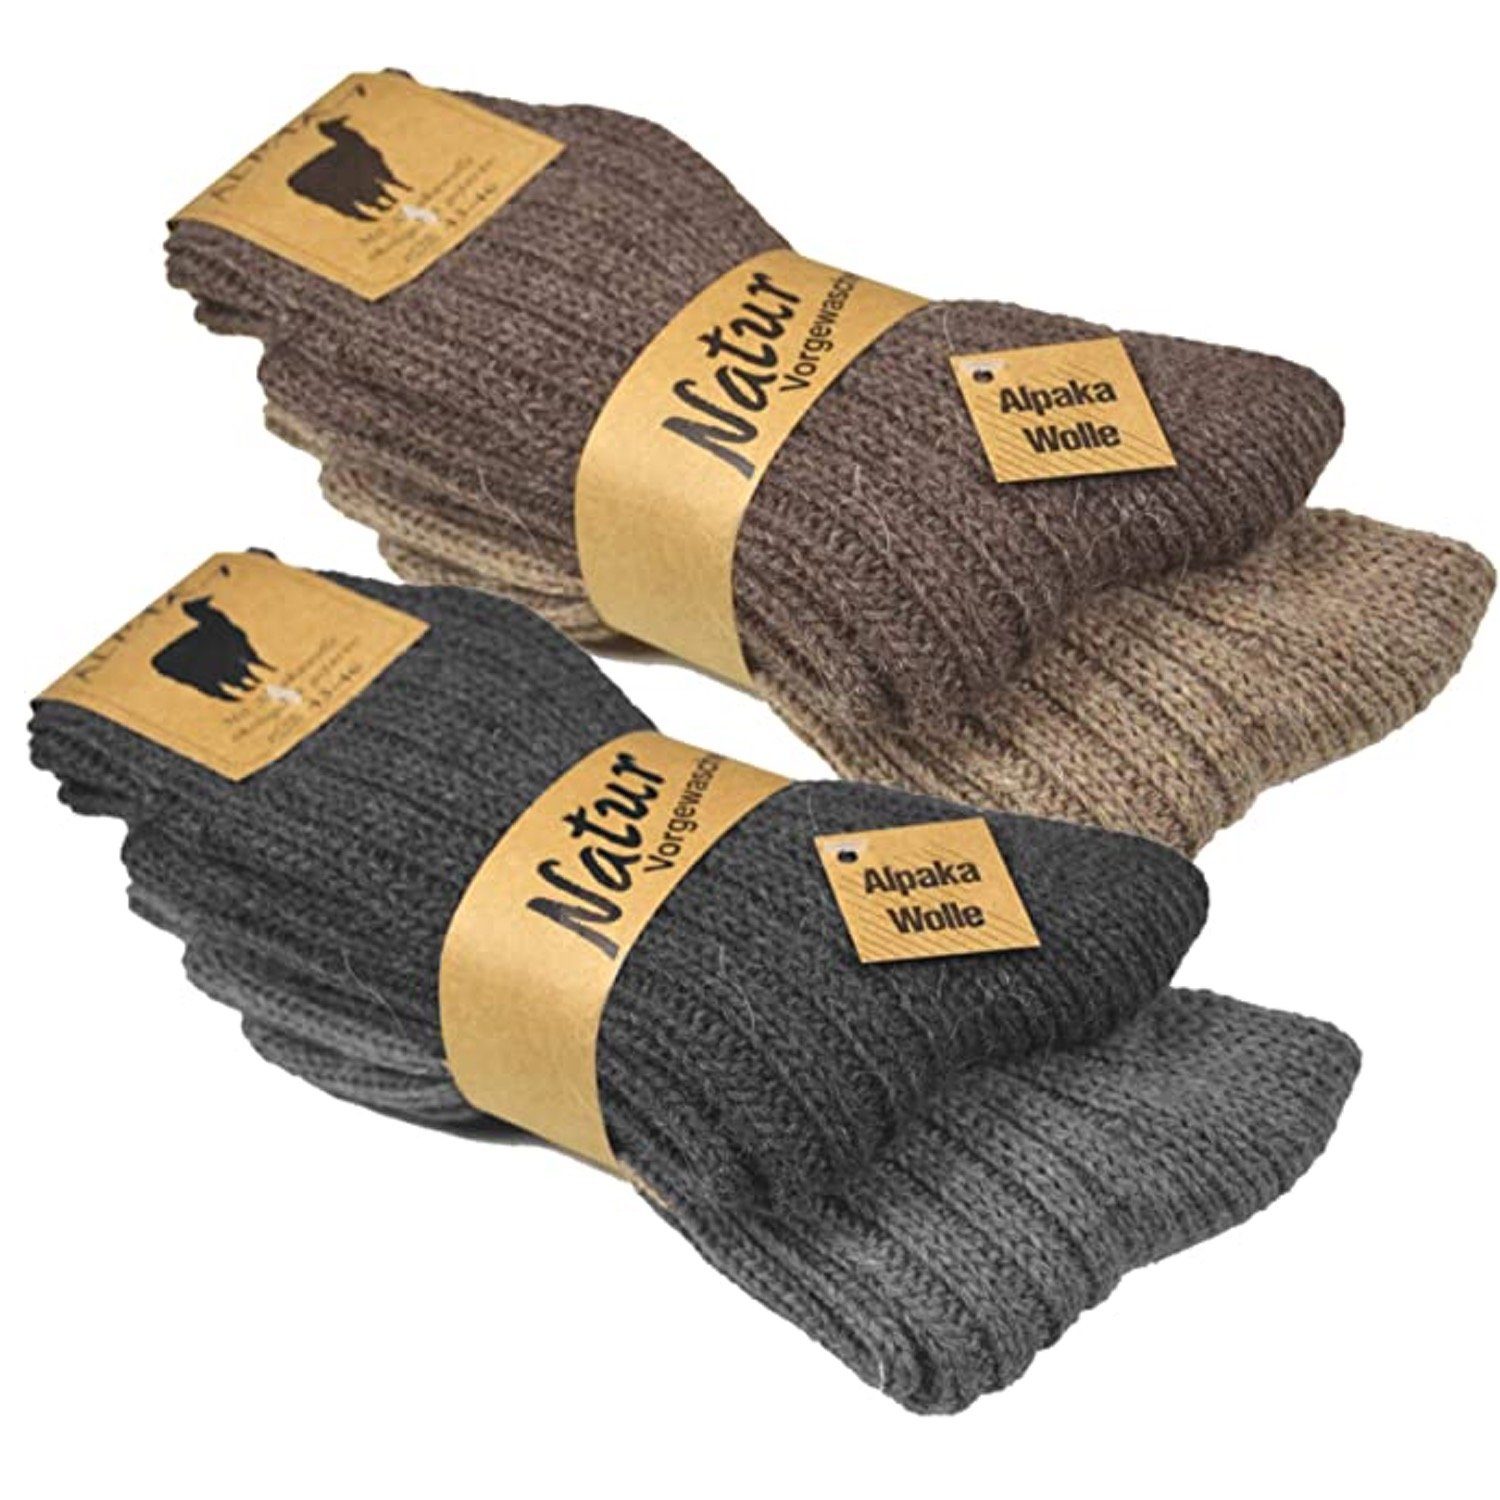 gestrickt Socken Wollsocken gemischt (4-Paar) Stricksocken underwear wie Alpaka Cocain Socken selbst